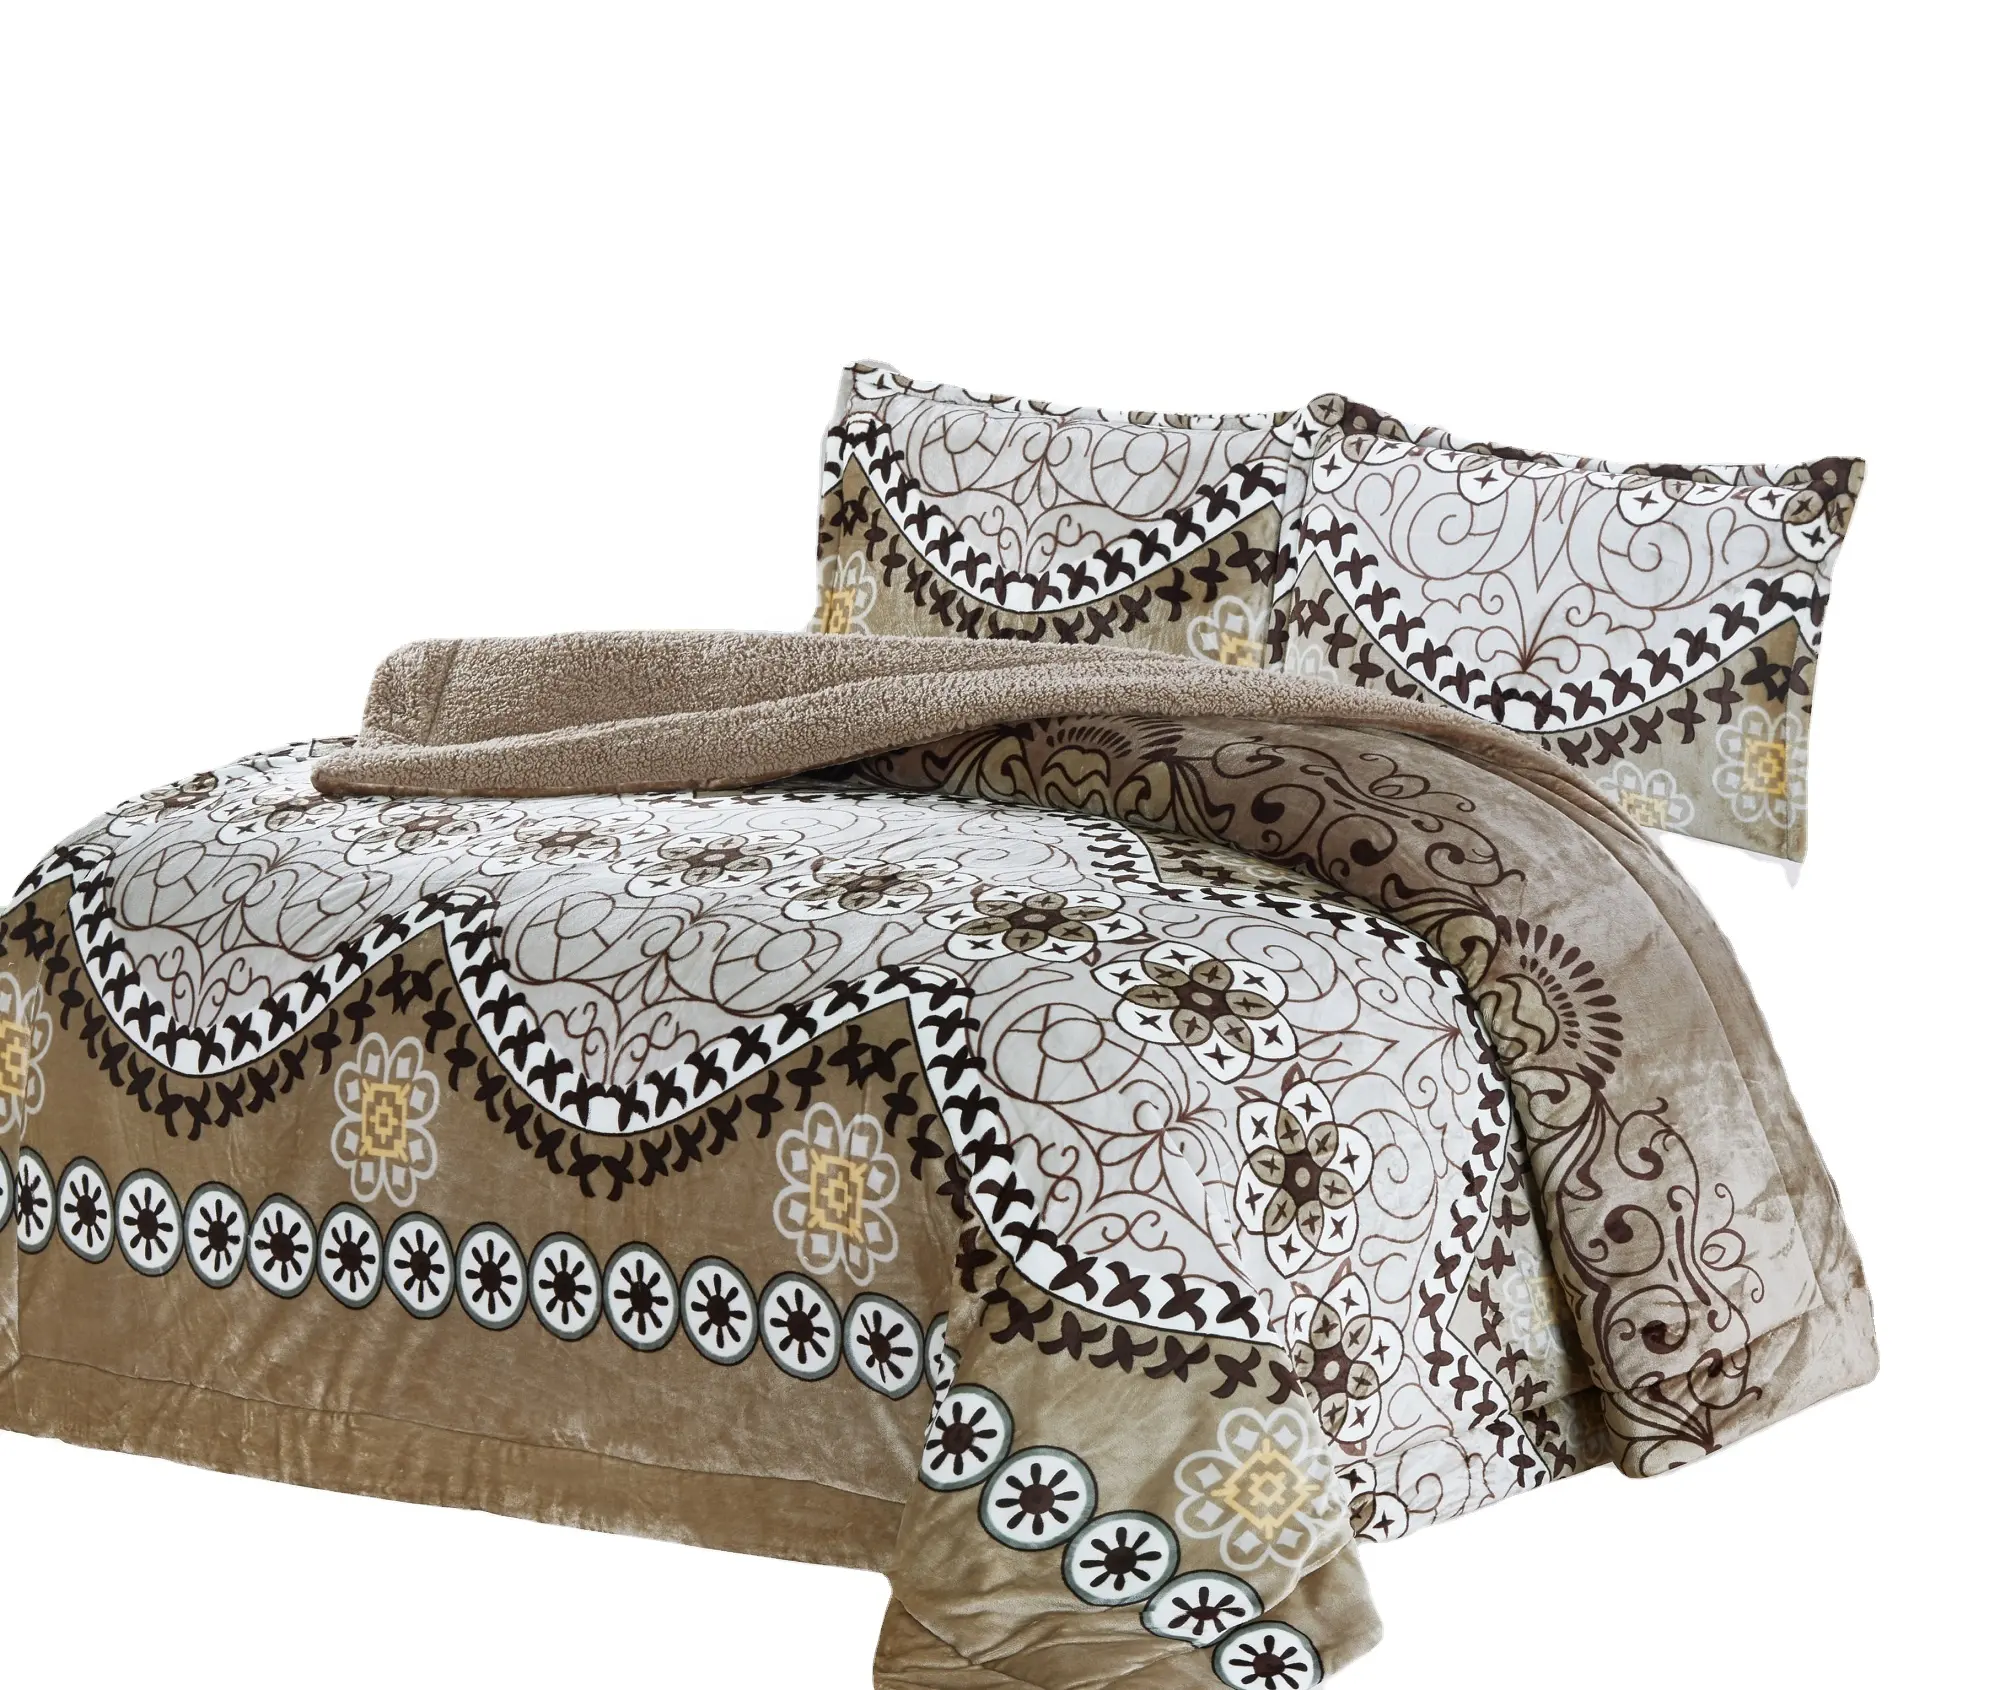 Wholesale printed borrego flannel bedding sets comforters